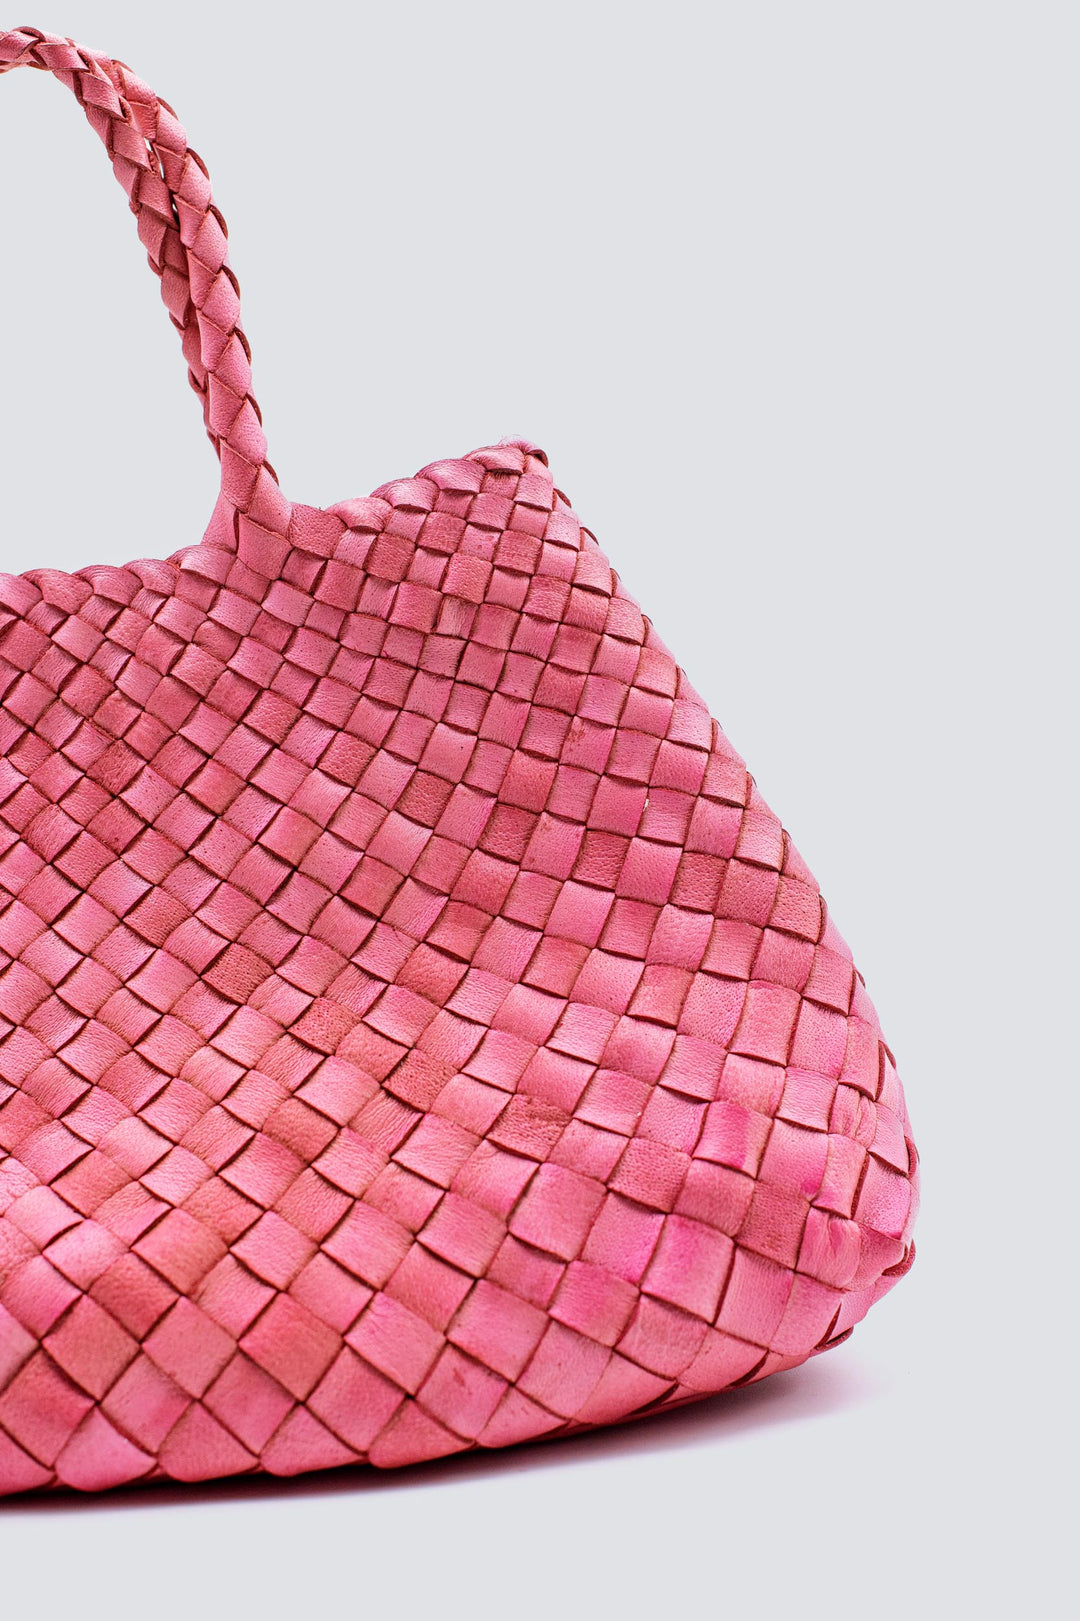 Dragon Diffusion woven leather bag handmade - Santa Croce Small Strawberry